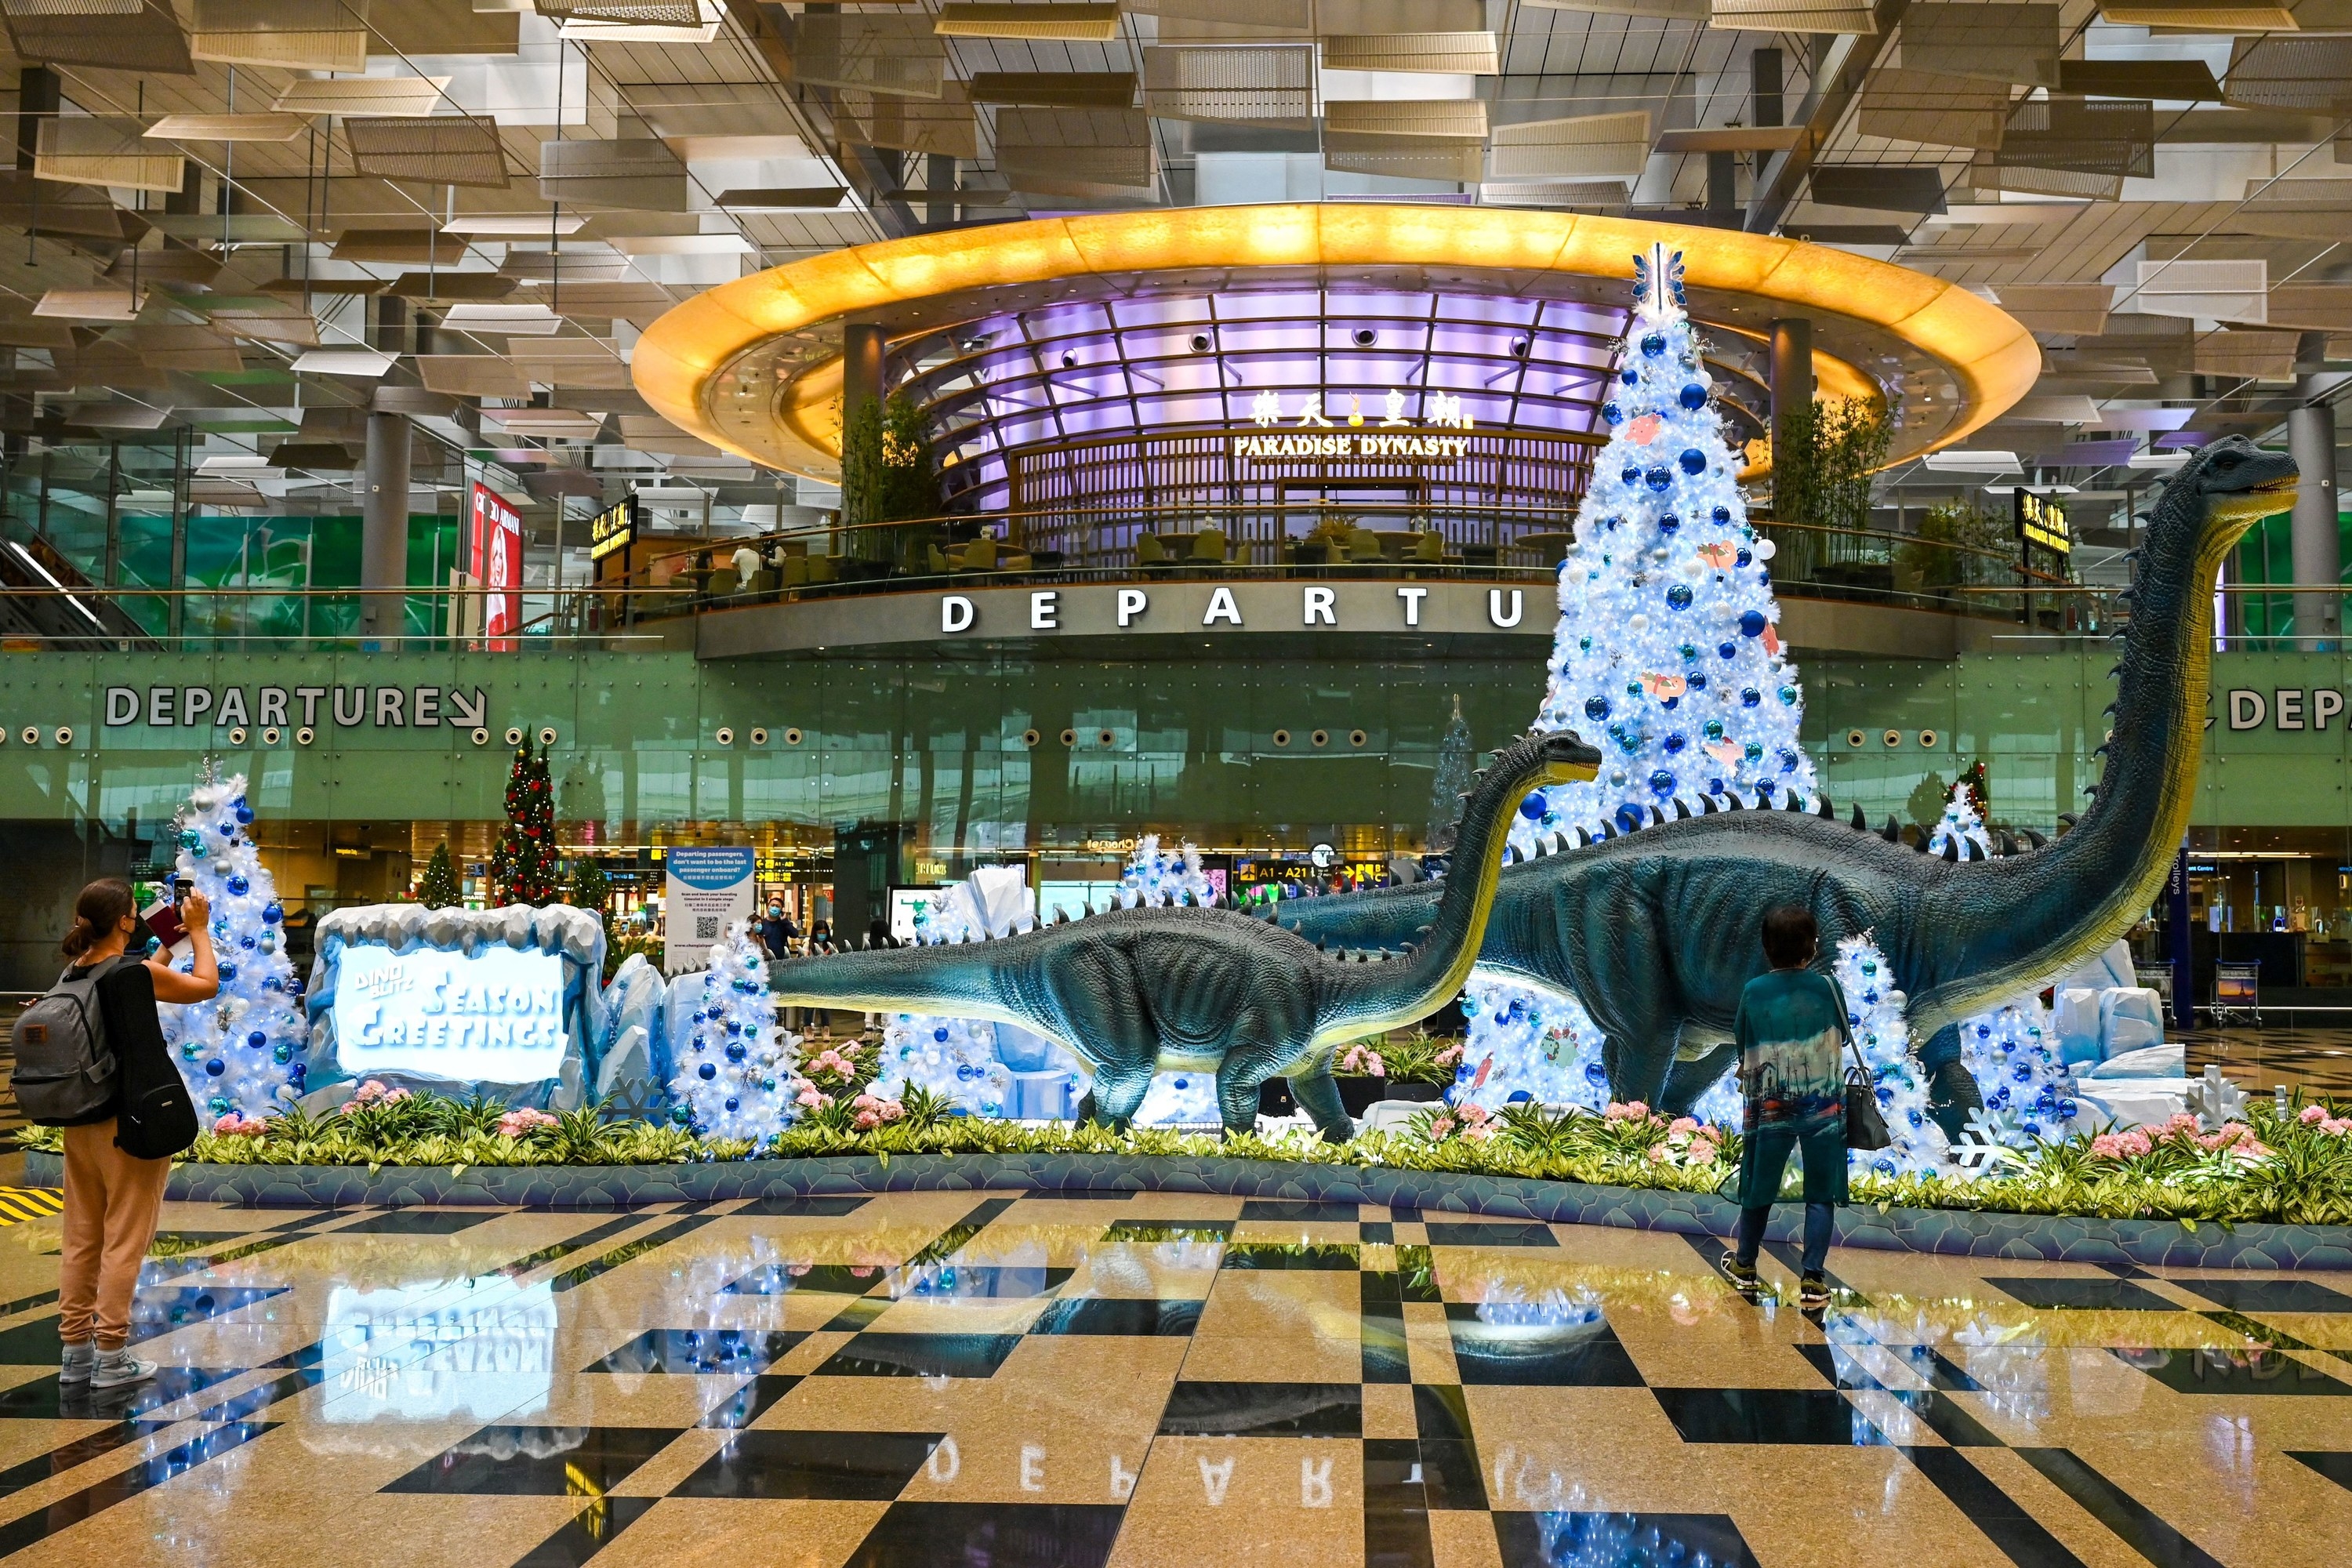 Boring' Singapore City Photo: Changi Airport Terminal 2